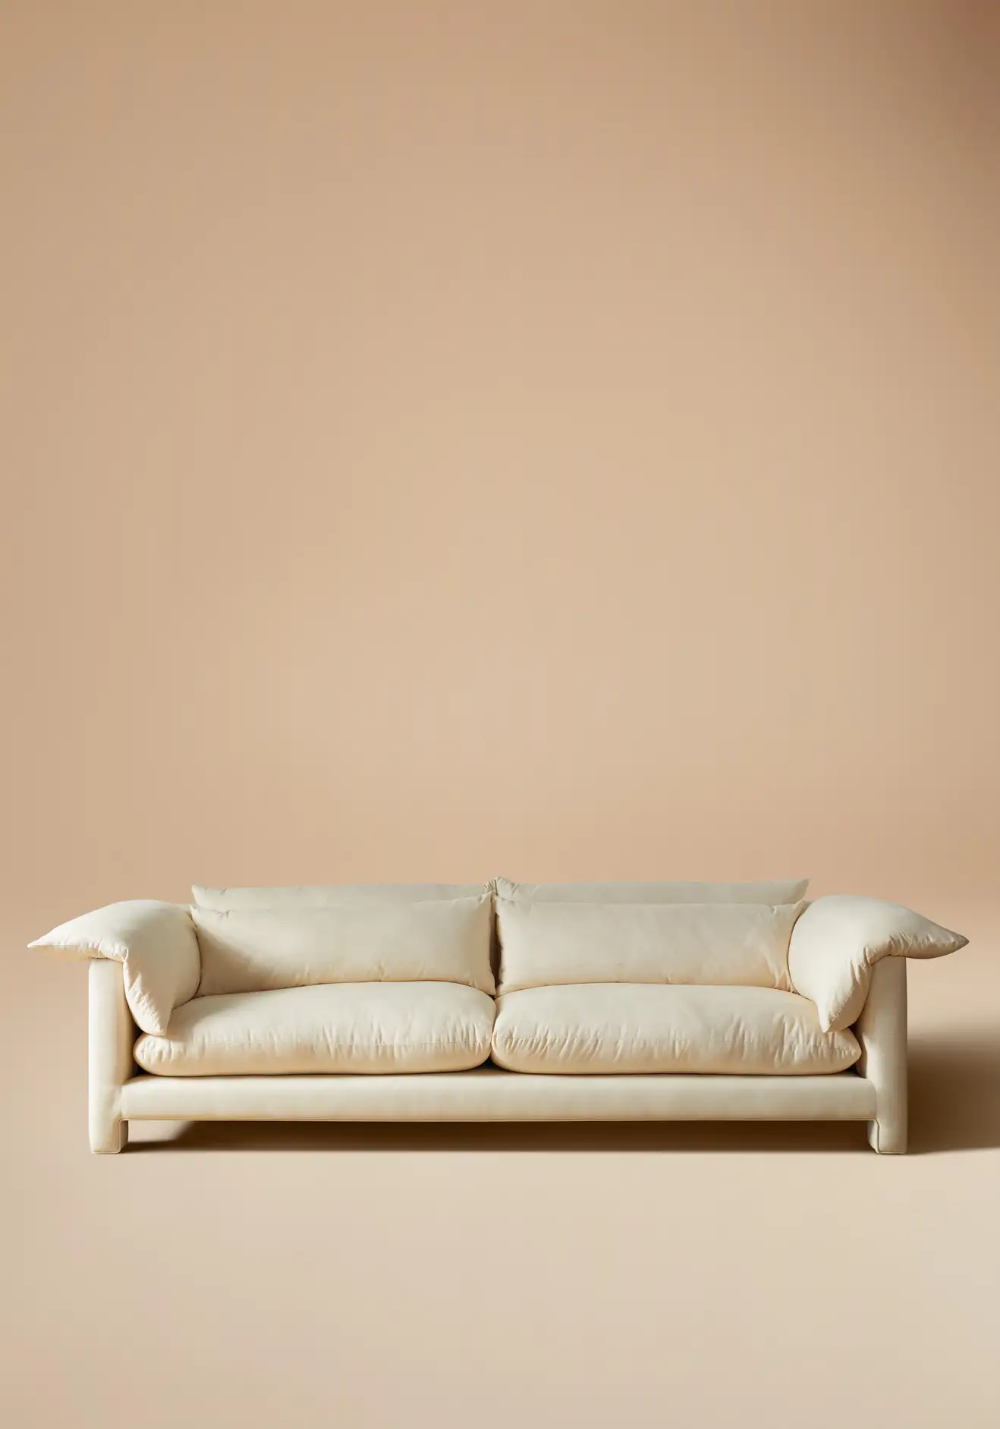 An unbiased view of flexsteel sofa